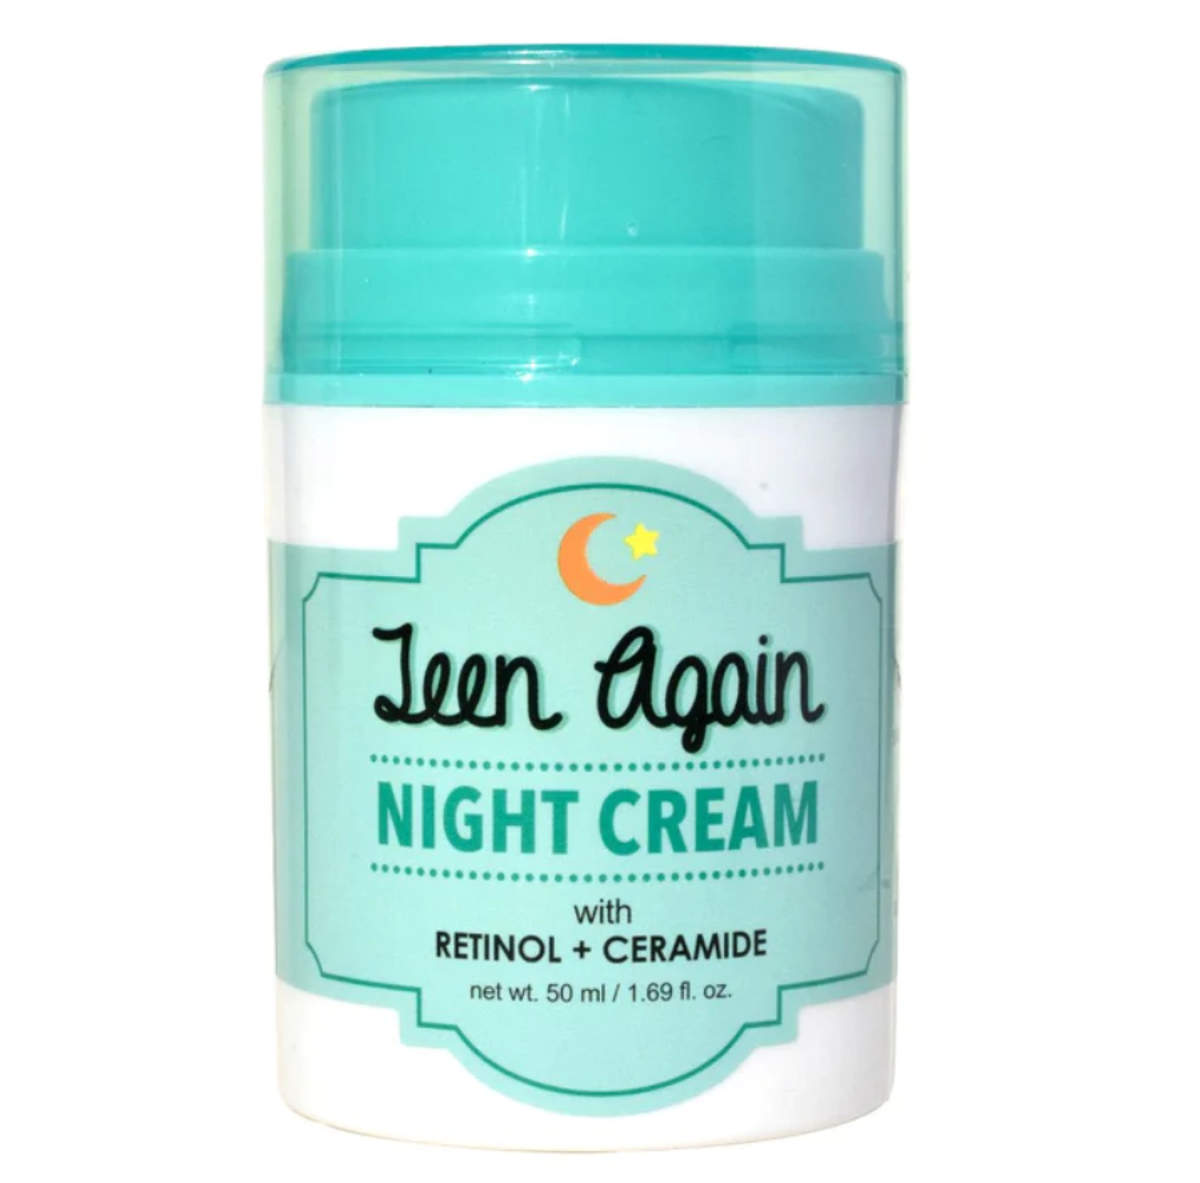 Teen again night cream